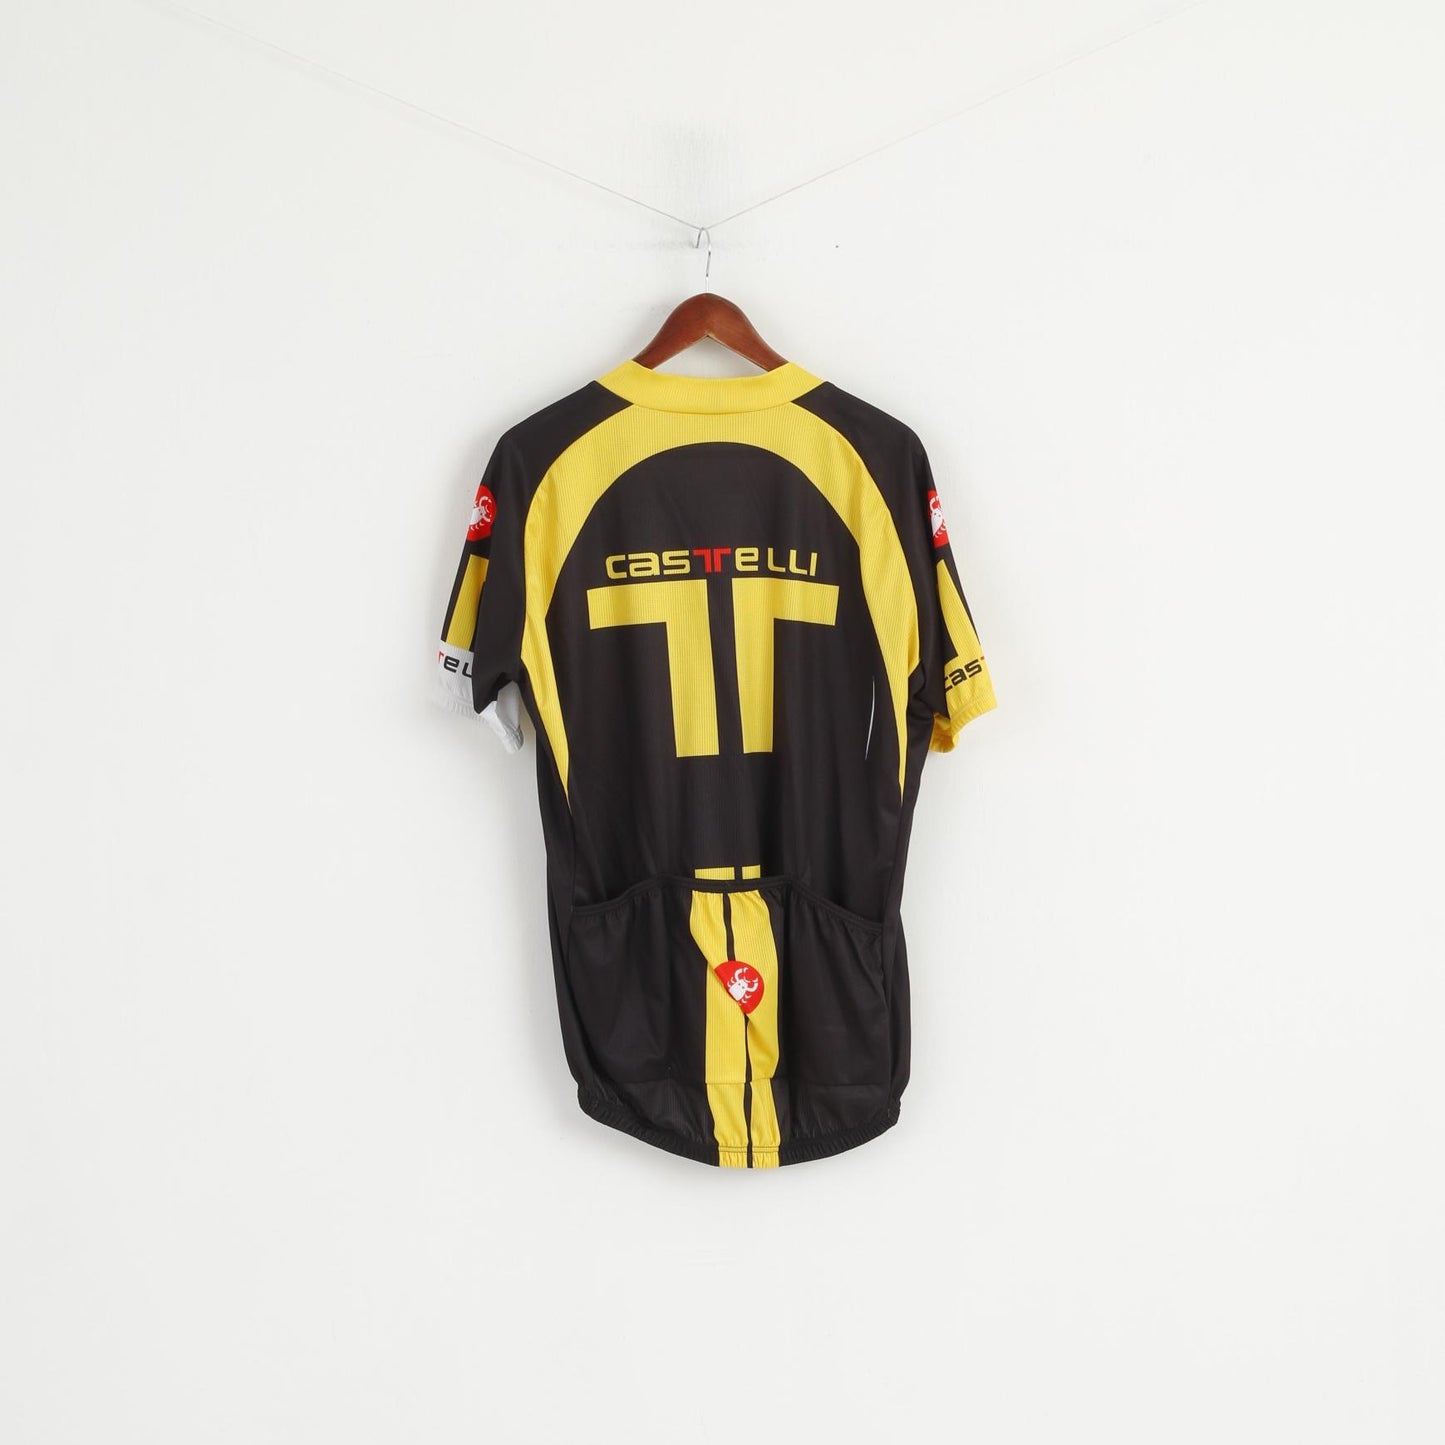 Castelli Hommes 4XL (XXL) Chemise de Cyclisme Jaune Noir Race Bike Full Zipper Jersey Top